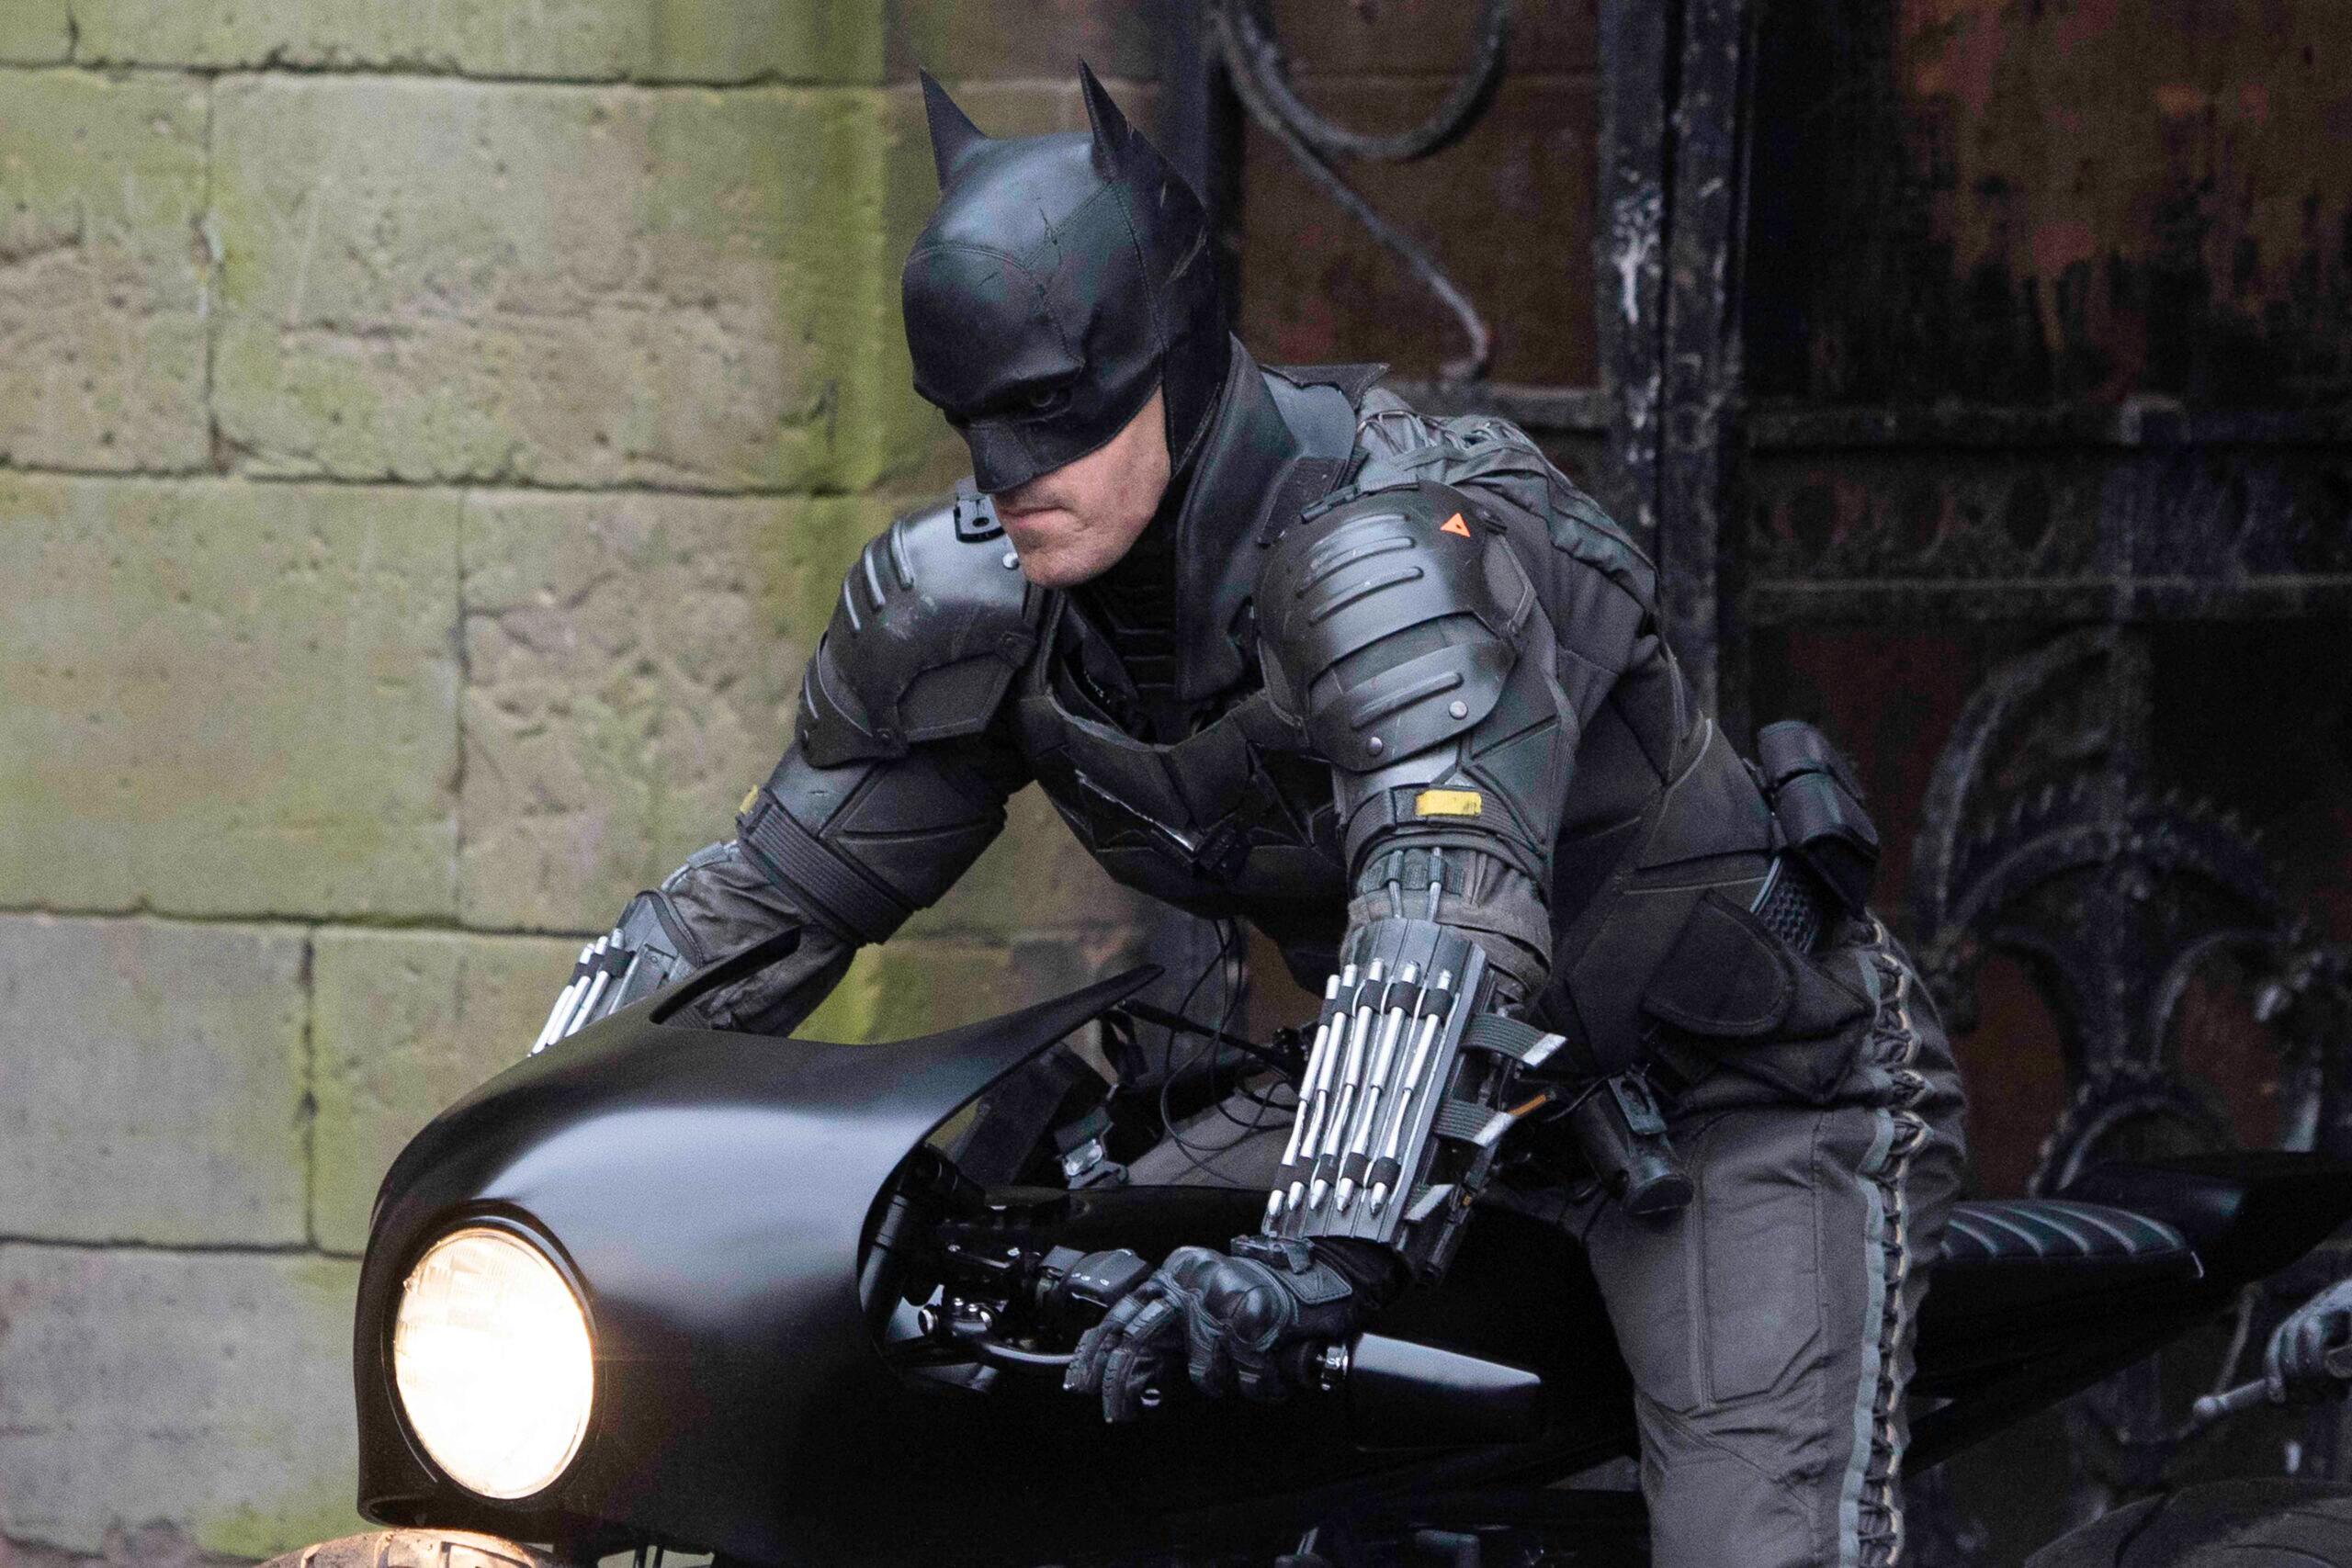 Robert Pattinson's stunt double dressed as Batman rides a motorbike in Liverpool.